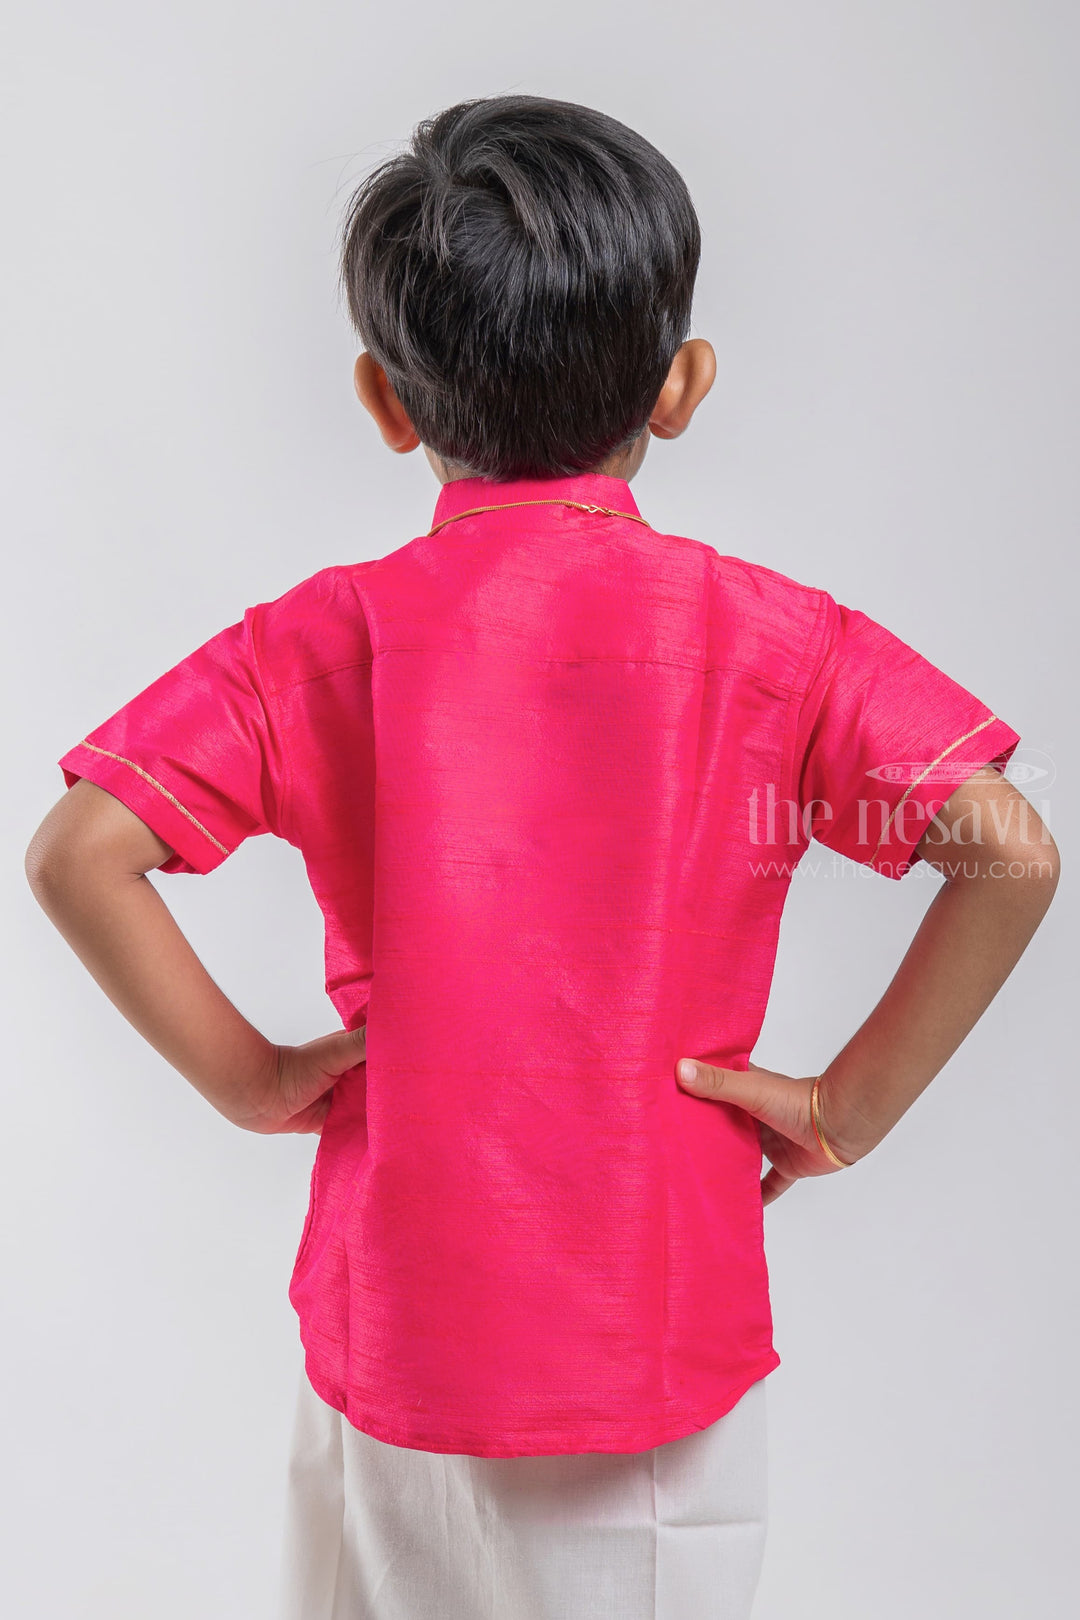 The Nesavu Boys Silk Shirt Regal Ruby Little Maharaja Boys Shirt With Flamingo Embroidery psr silks Nesavu